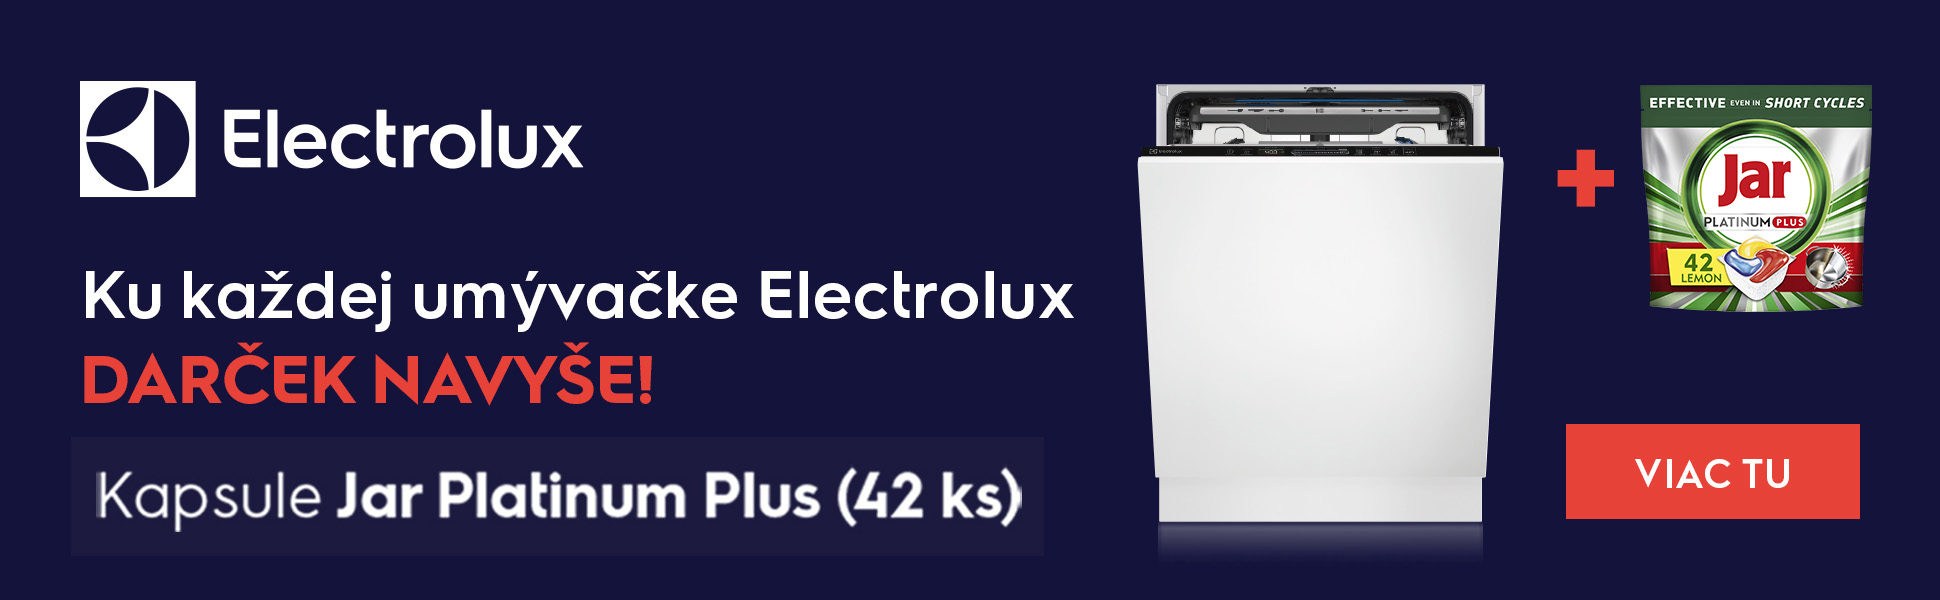 electrolux platinum